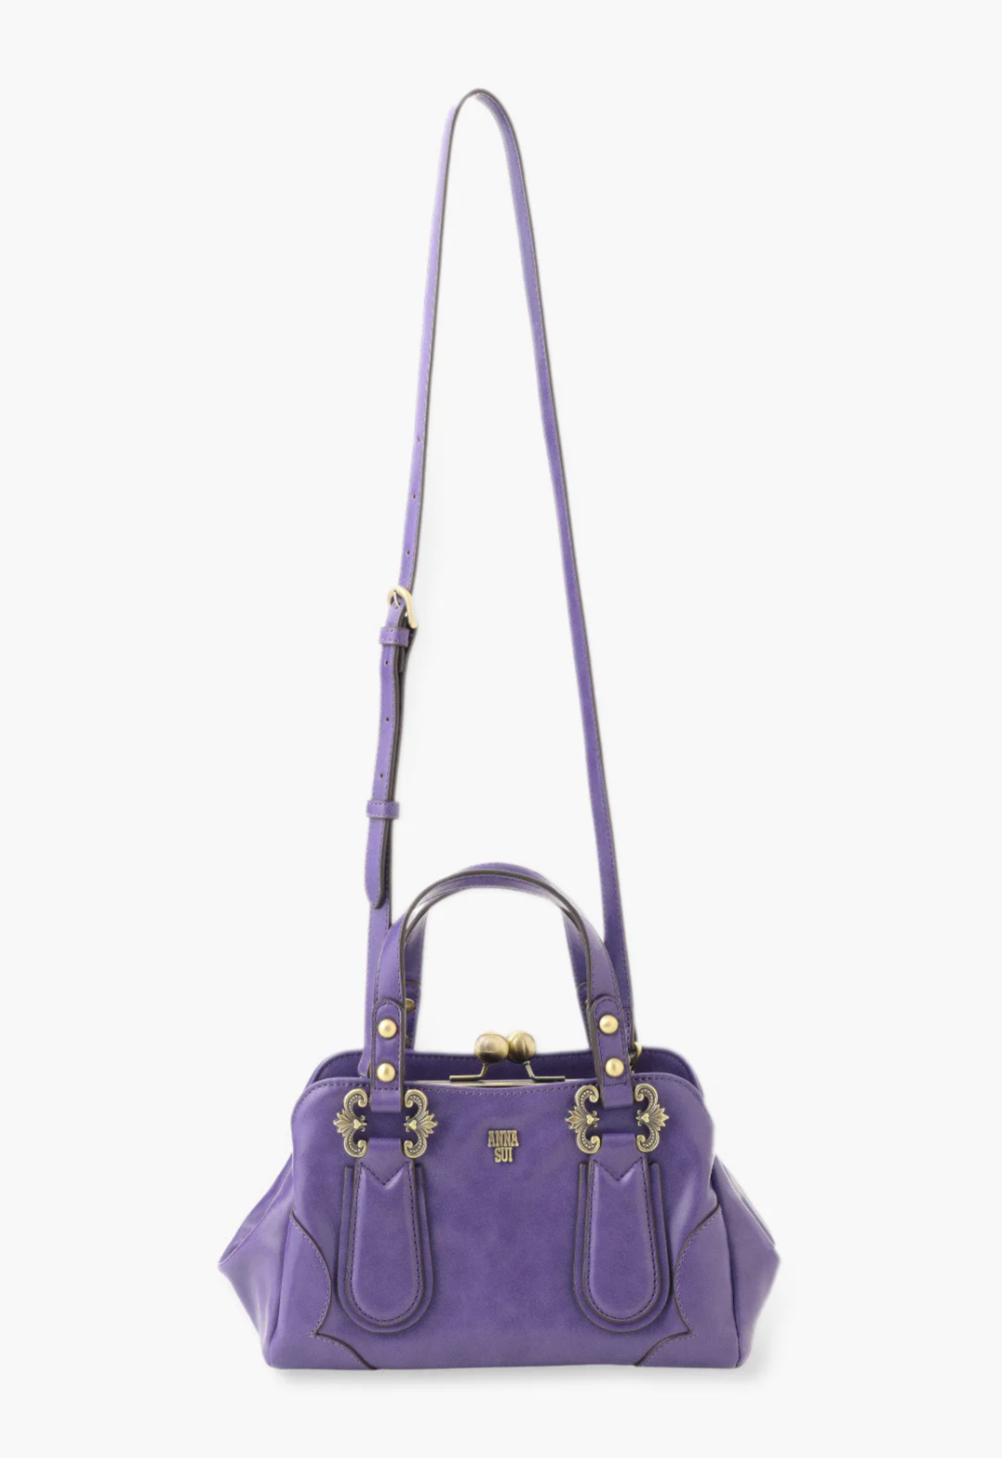 Handbag purple, golden ball clasp closure, long shoulder-straps attached inside 